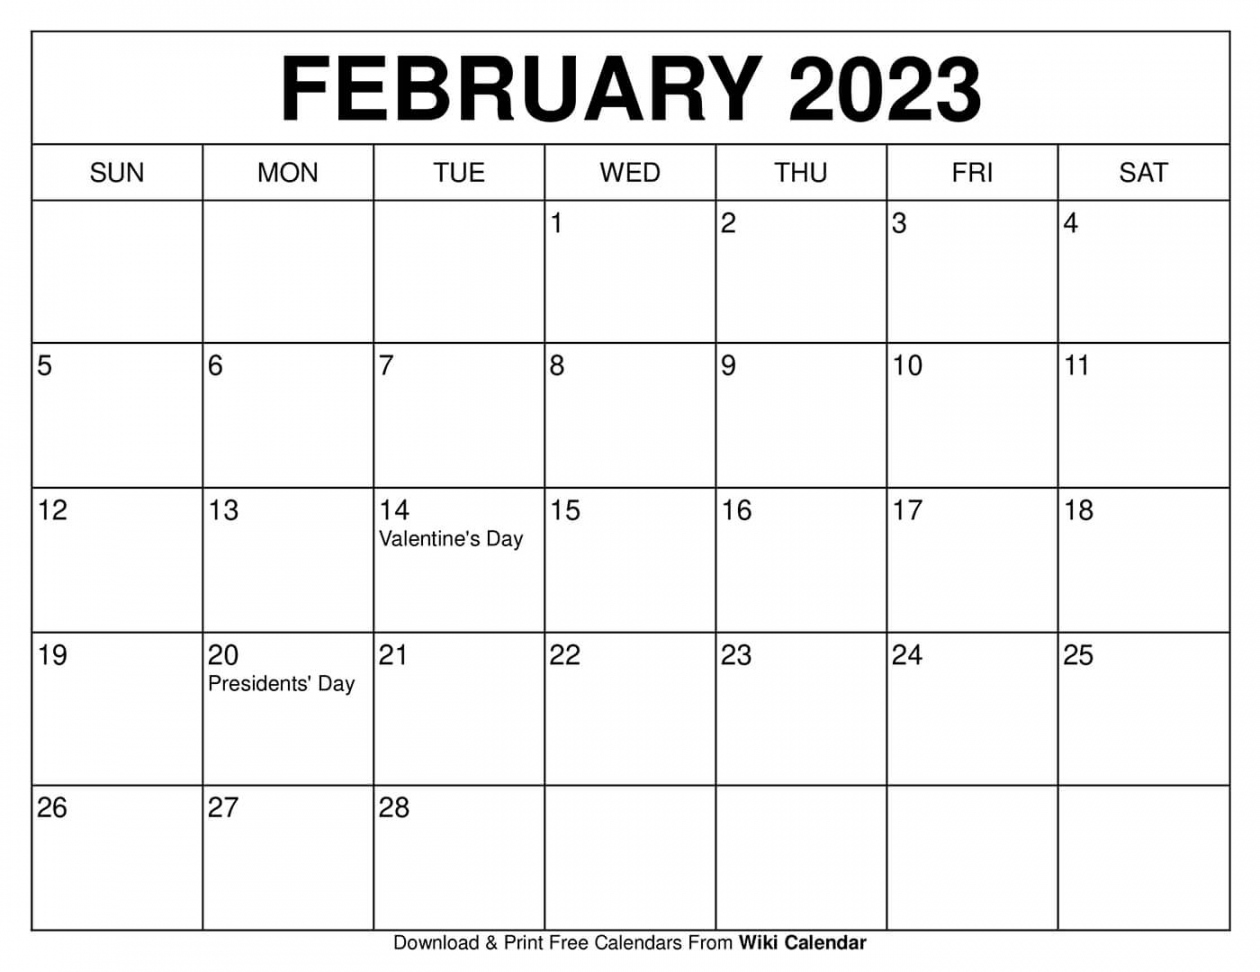 February Free Printable Calendar - Printable - Printable February  Calendar Templates with Holidays - Wiki